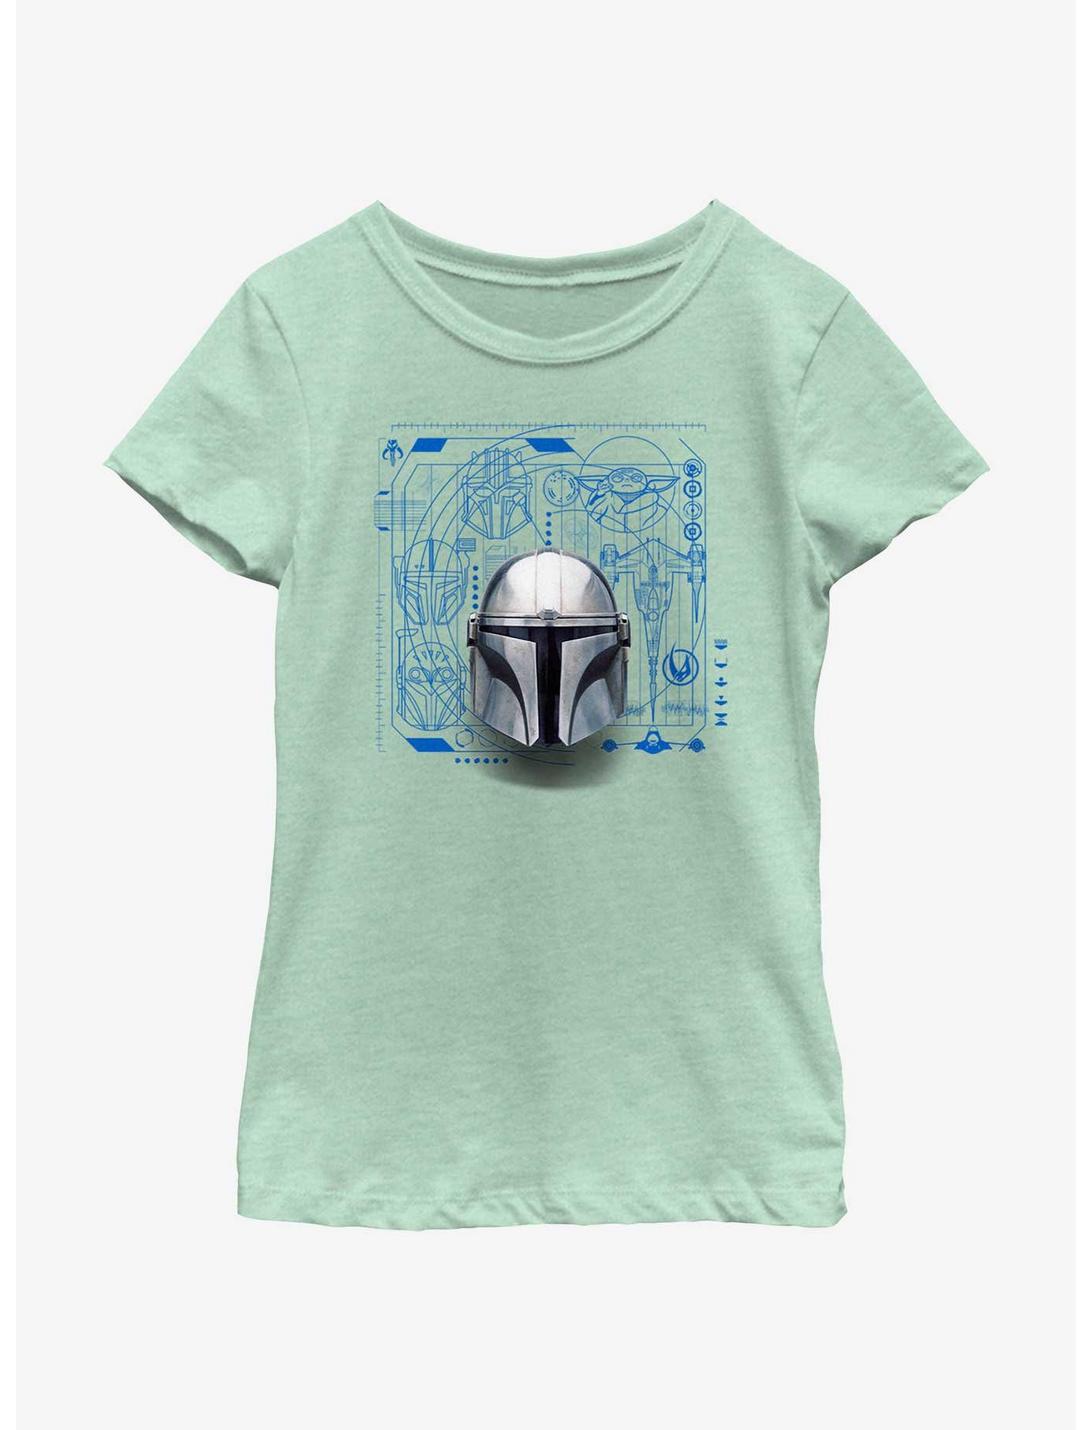 Star Wars The Mandalorian Helmet Schematic Youth Girls T-Shirt, MINT, hi-res